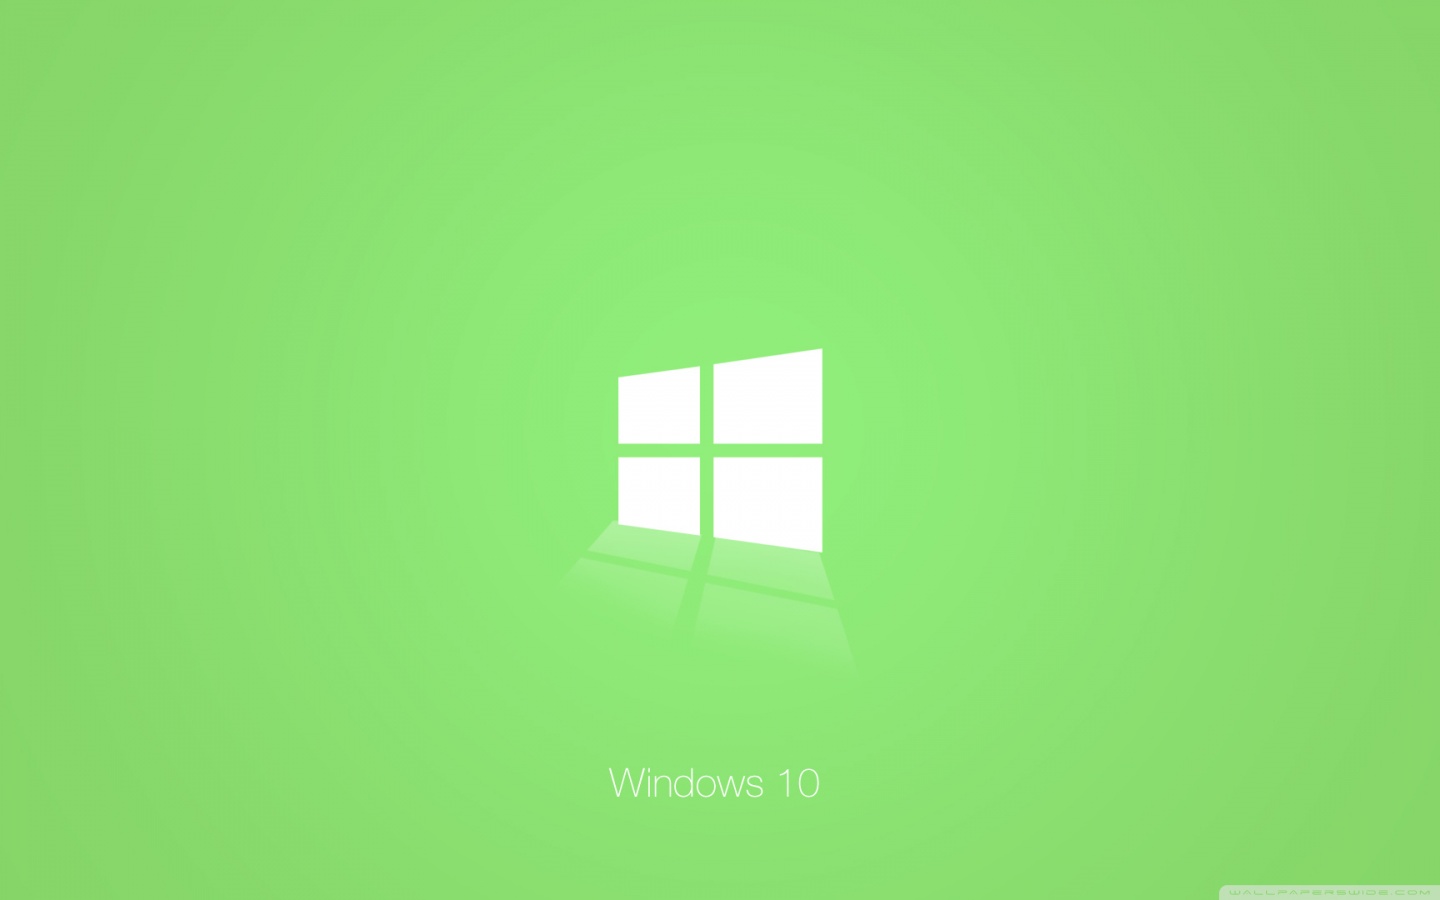 Windows 10 Green Ultra HD Desktop Background Wallpaper for 4K UHD TV, Widescreen & UltraWide Desktop & Laptop, Tablet